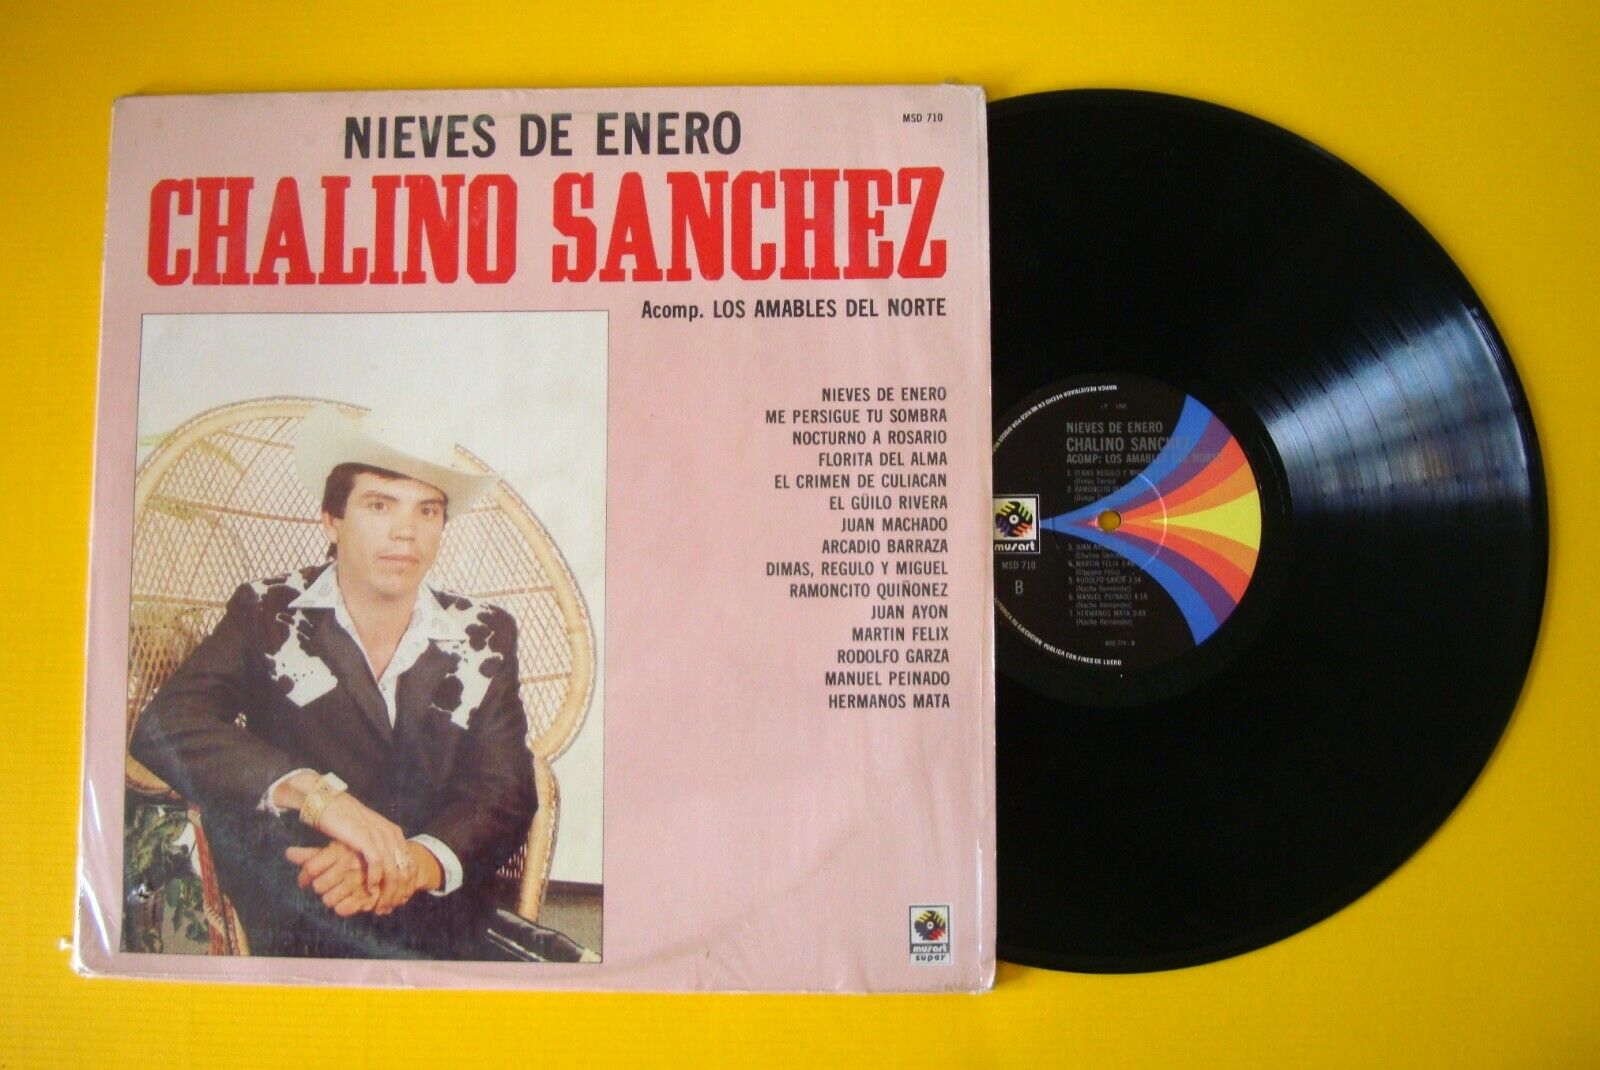 popsike.com on "archived! $ 690 | ? Mexican Lp Musart ?chalino Sanchez? Nieves De Enero #vinyl https://t.co/OkRDr8bFm7 https://t.co/o8vVNHa3Tv" /